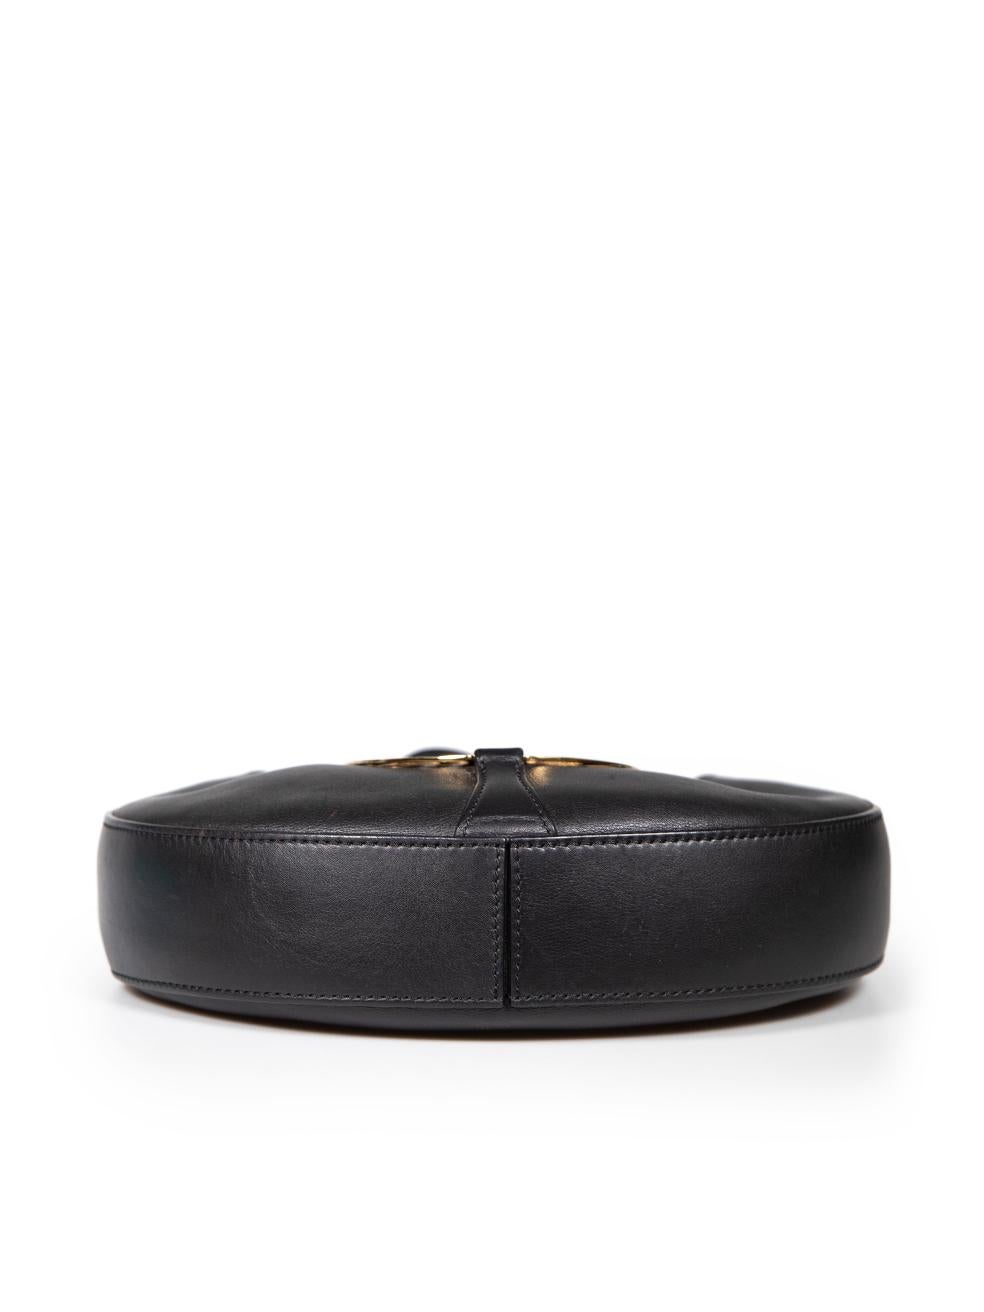 Women's Loewe Black Leather Joyce Small Shoulder Bag For Sale